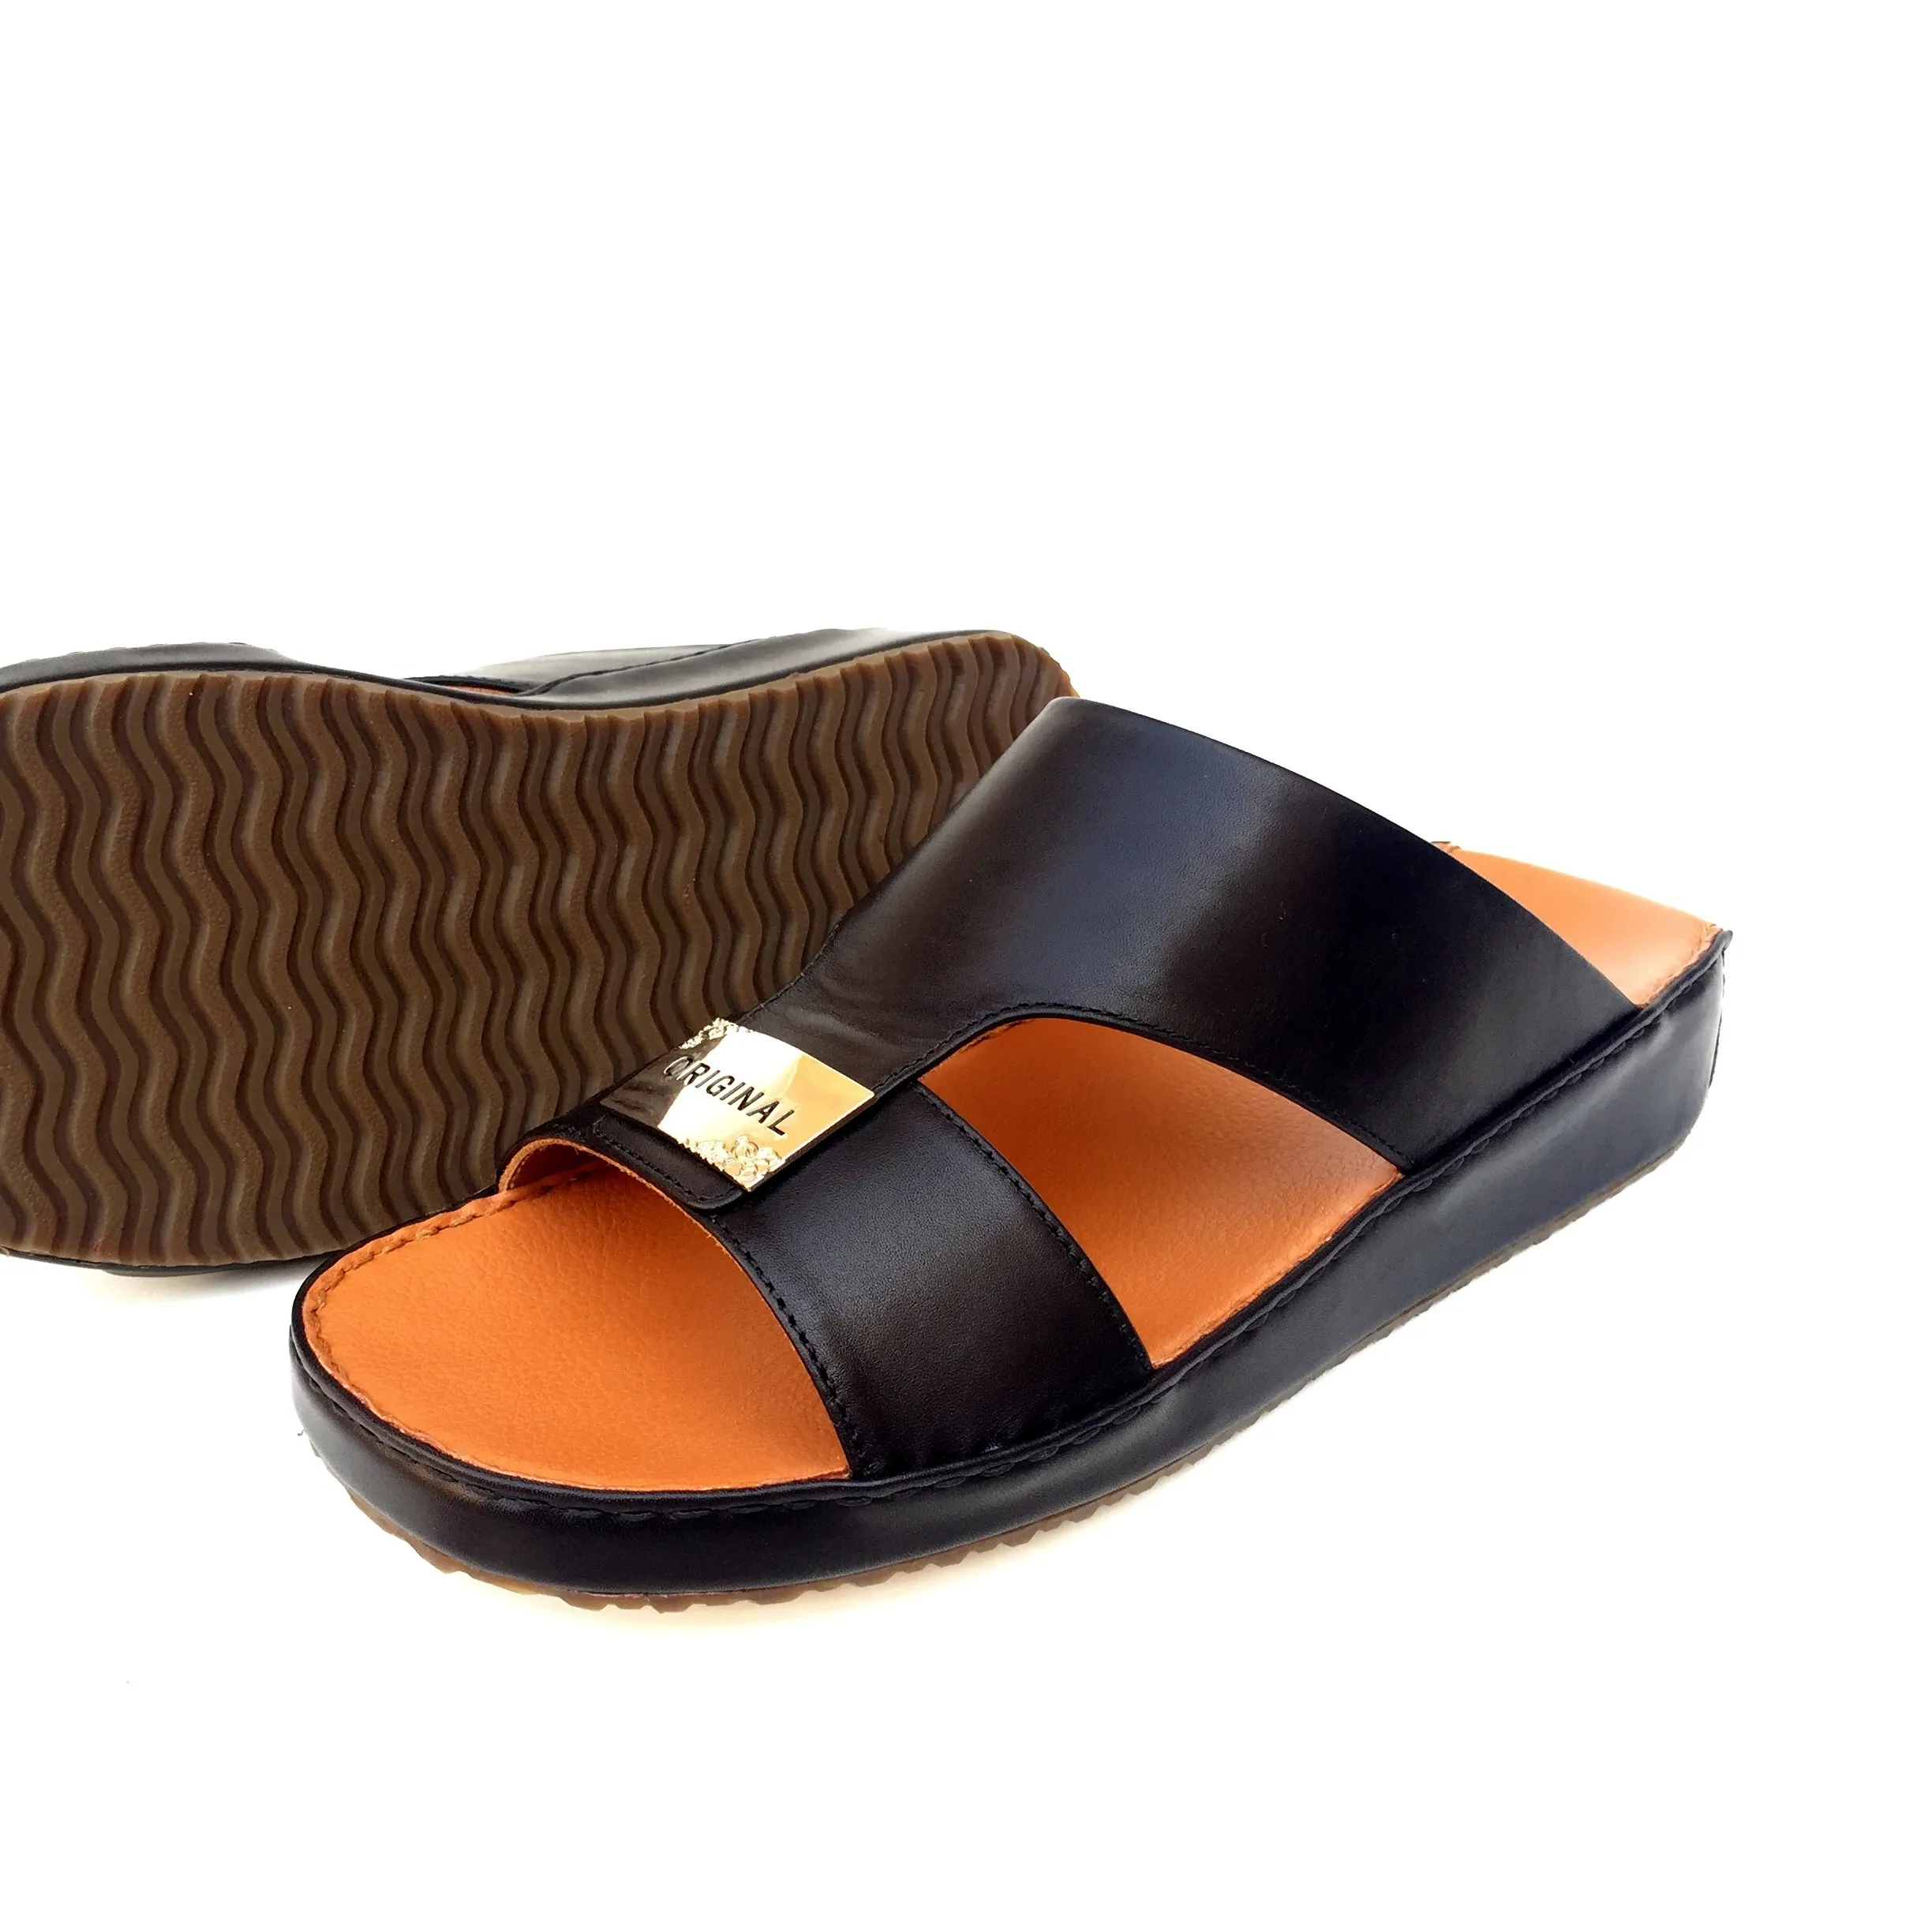 Sandalias de cuero para hombre, calzado árabe